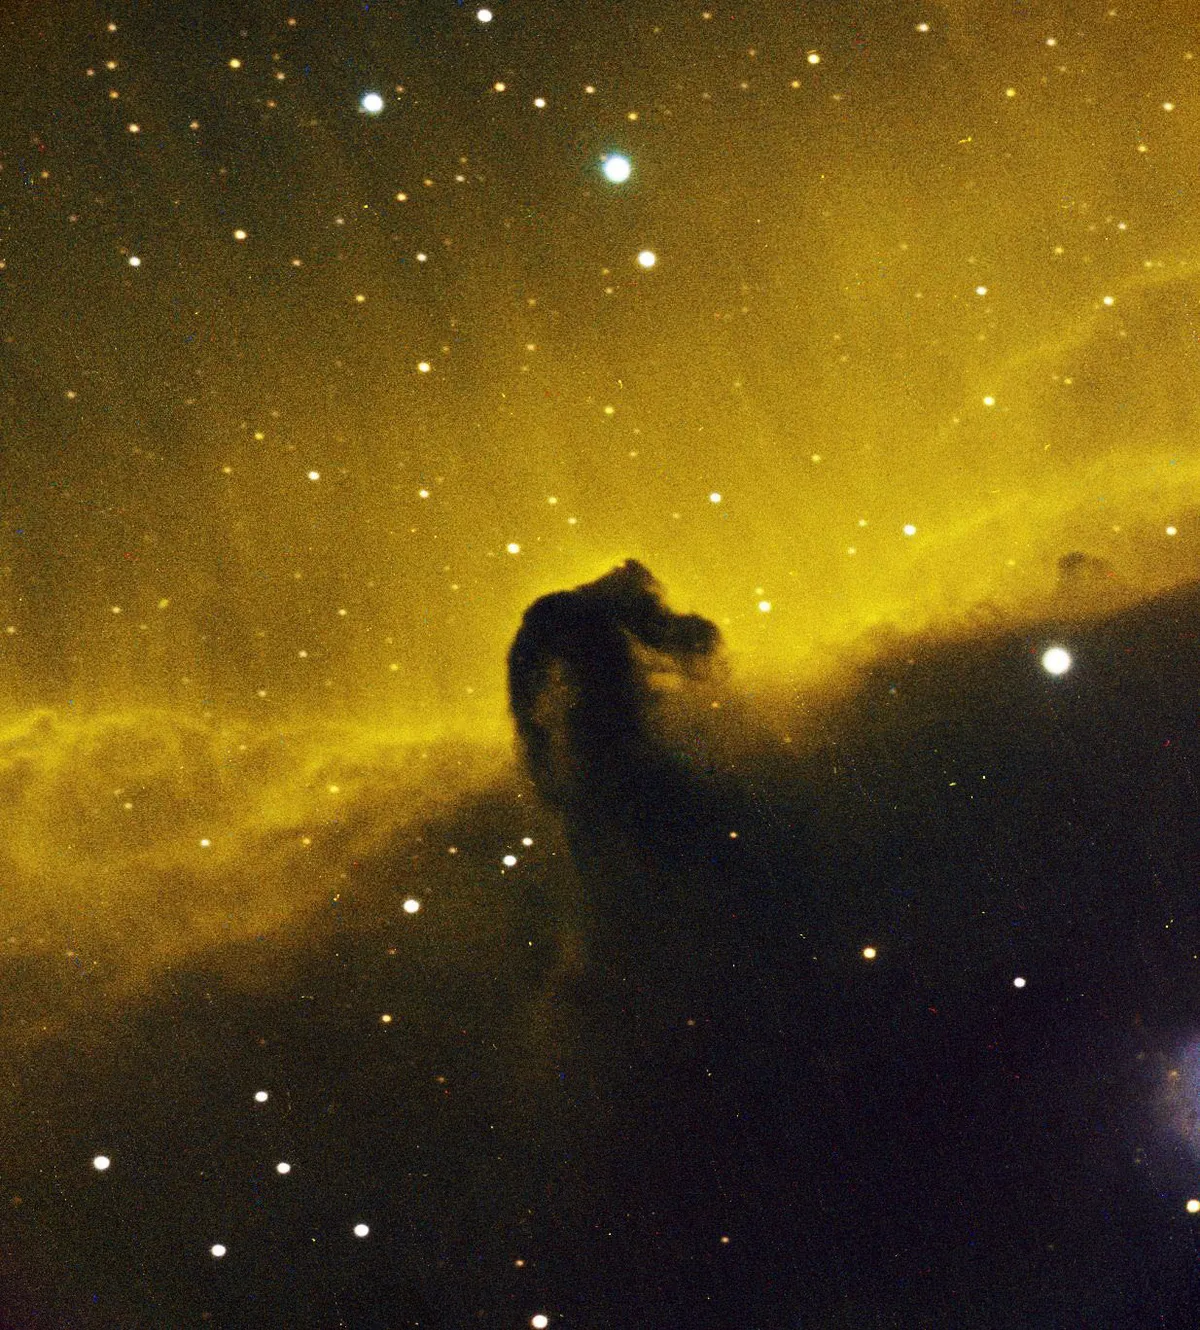 B33 Horsehead Nebula by Mark Griffith, Swindon, Wiltshire, UK. Equipment: Celestron C11 Sct, Skywatcher NEQ6 pro mount,Atik 383L  camera, motorised filter wheel and Astronomik filters.